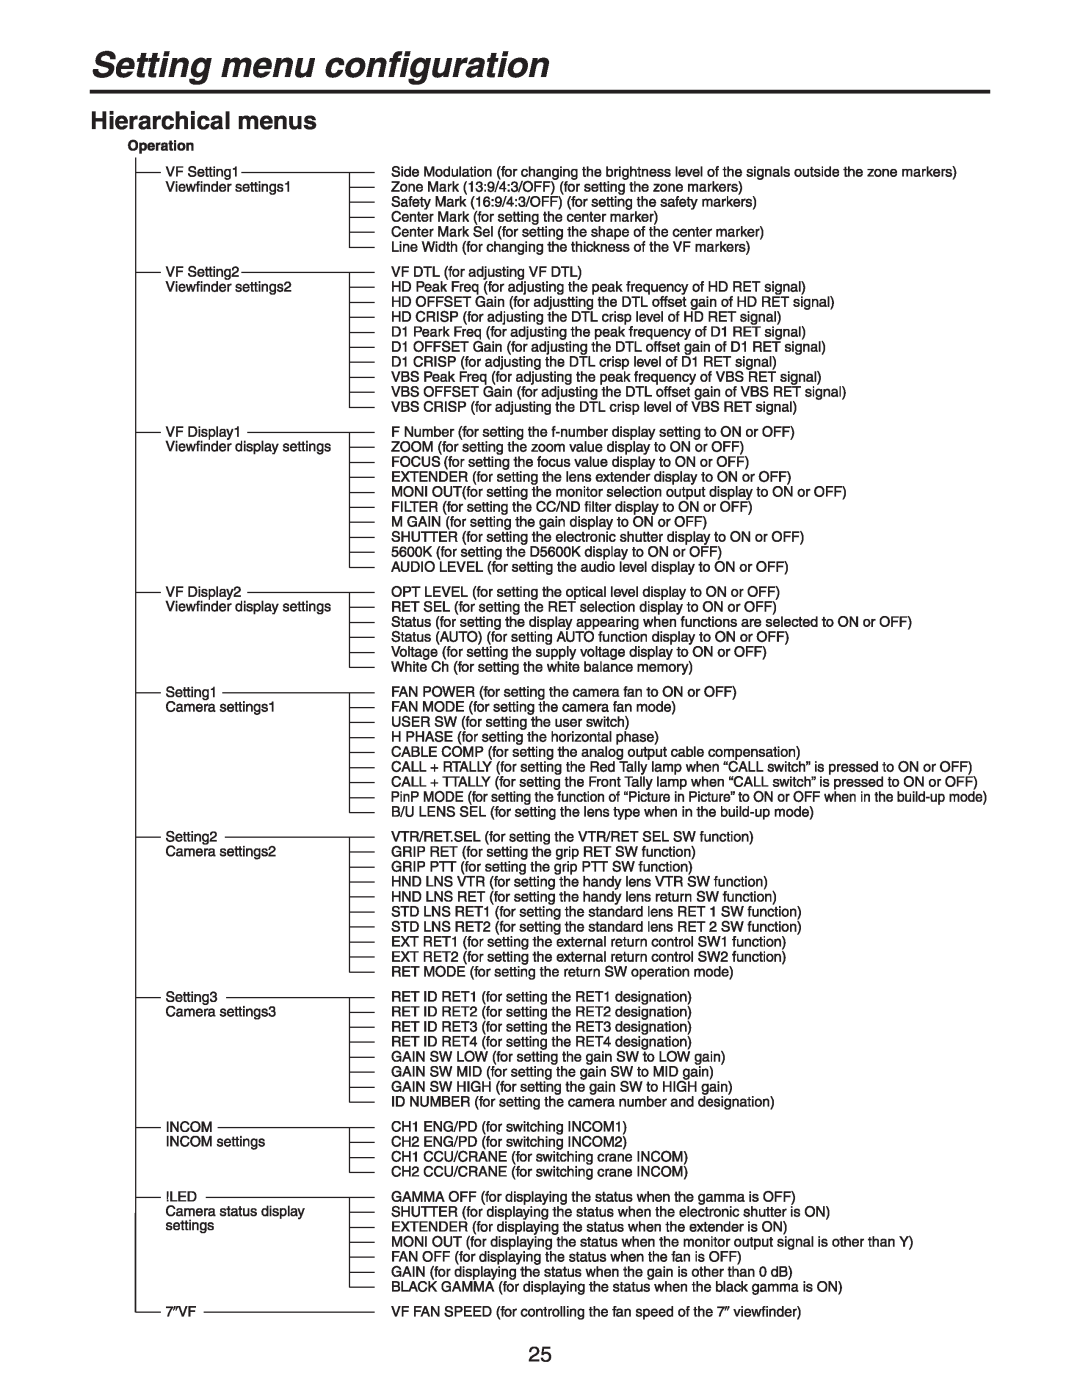 Panasonic AK-HC931BP manual Setting menu configuration, Hierarchical menus 